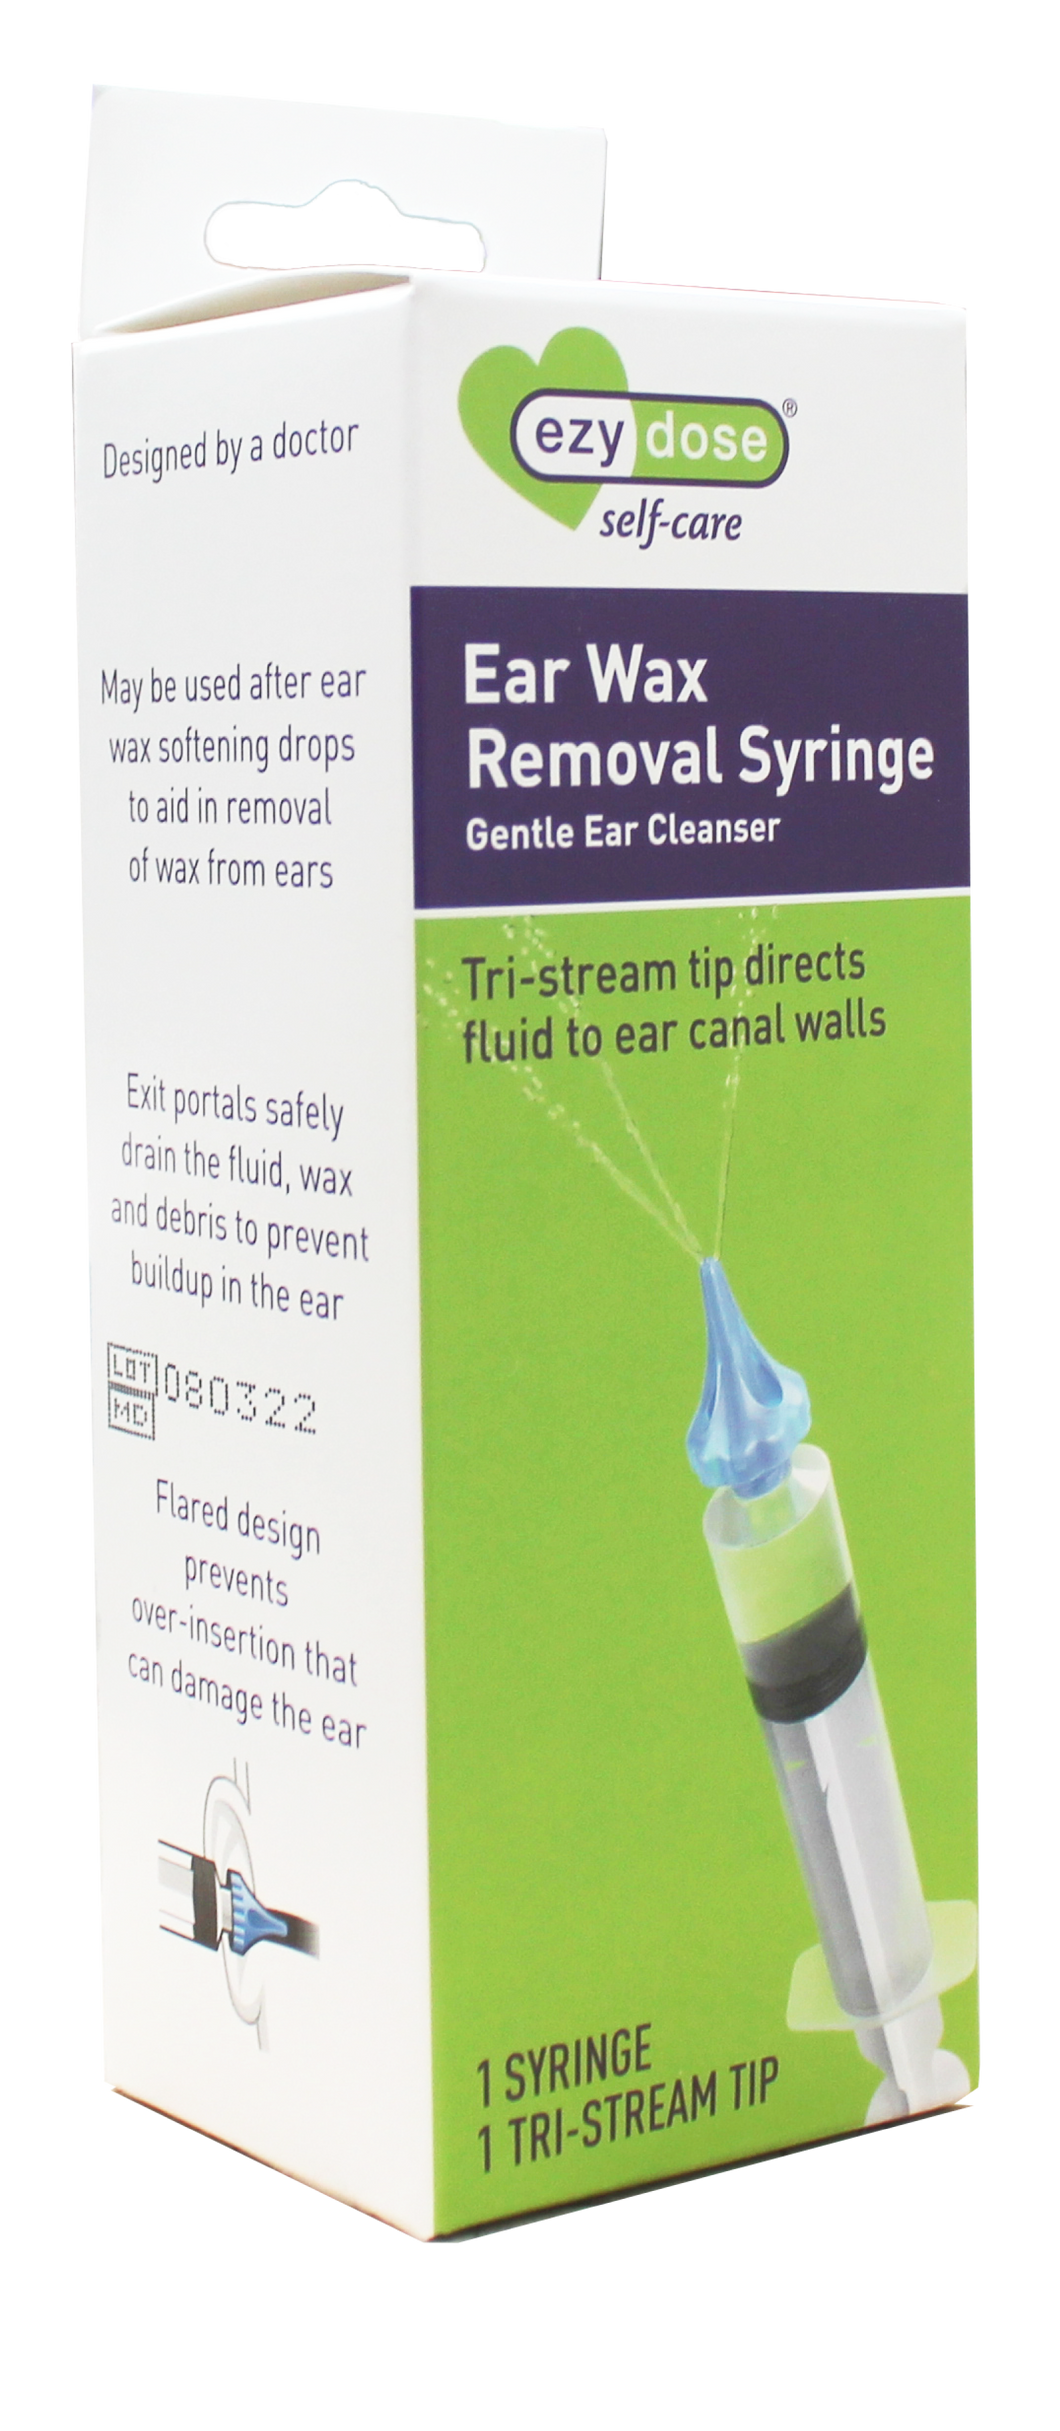 Ear Wax Removal Syringe